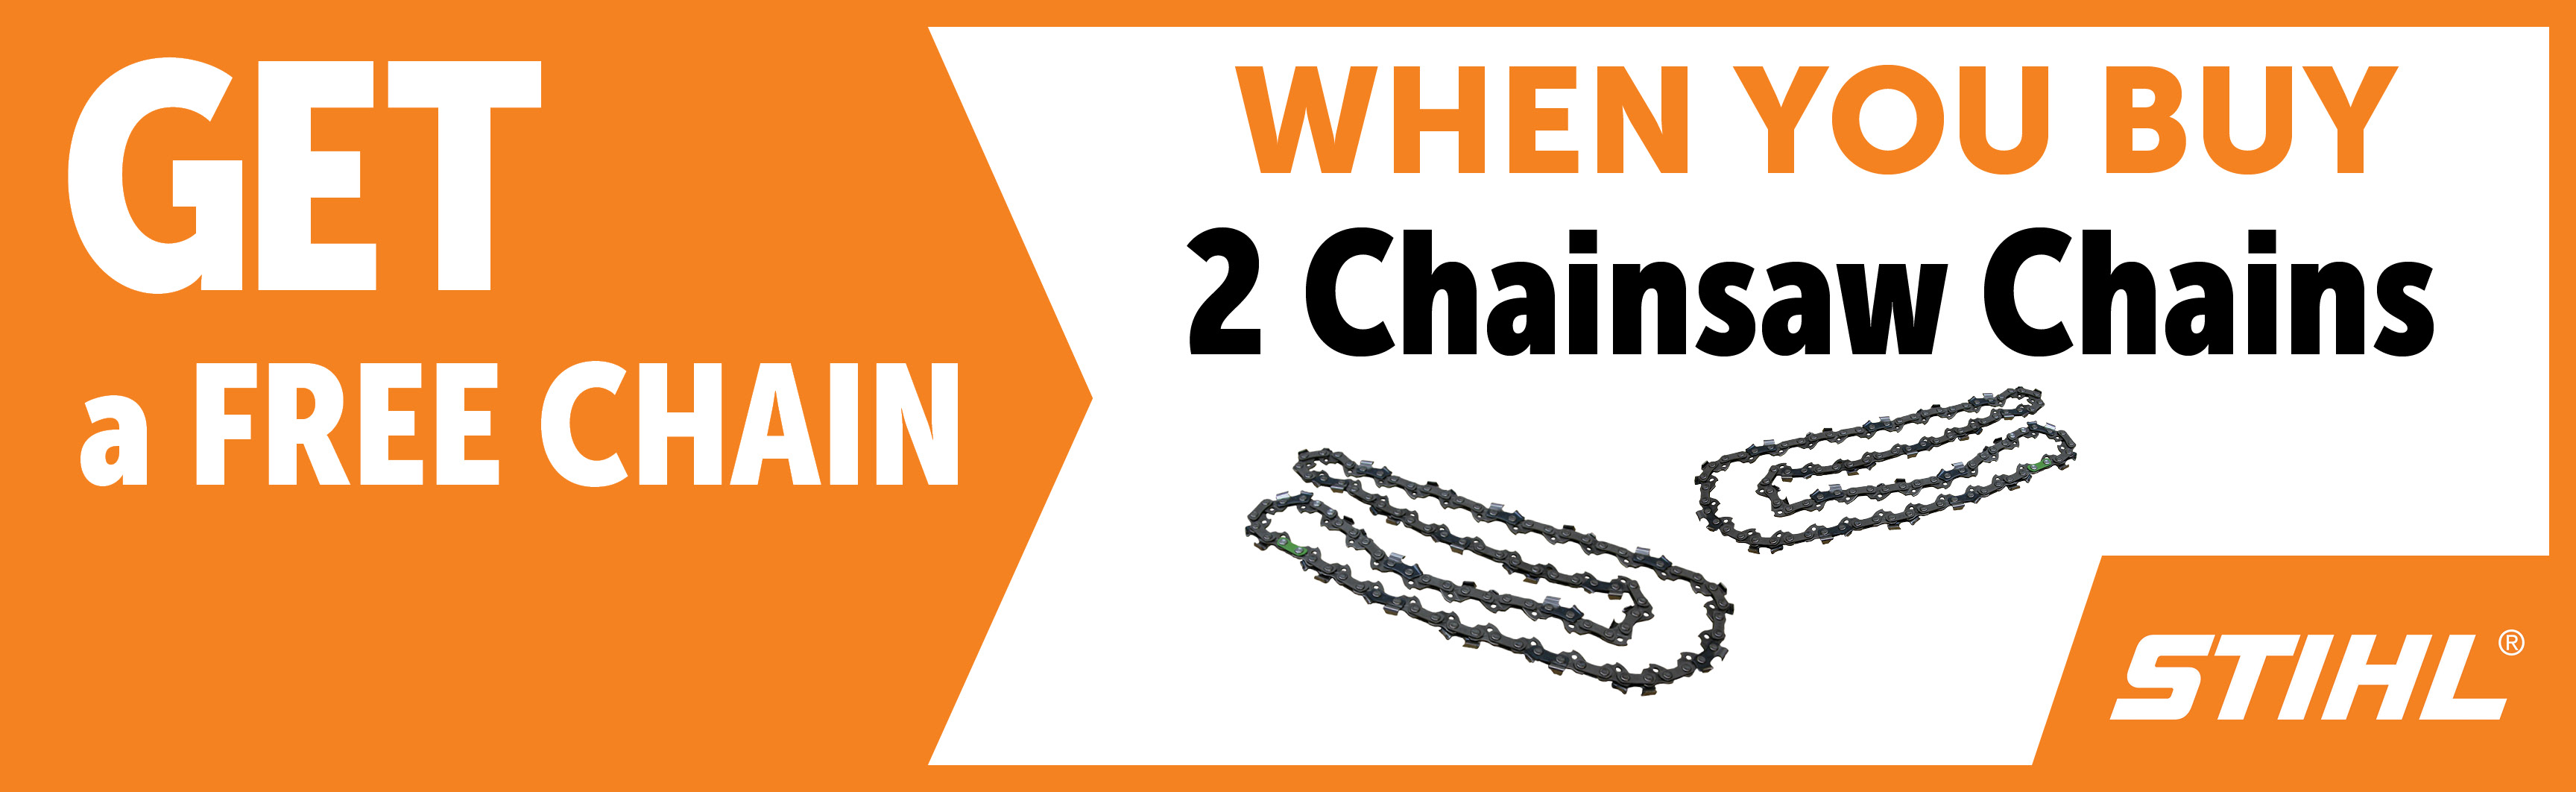 STIHL: Buy 2 Chainsaw Chains get 1 FREE